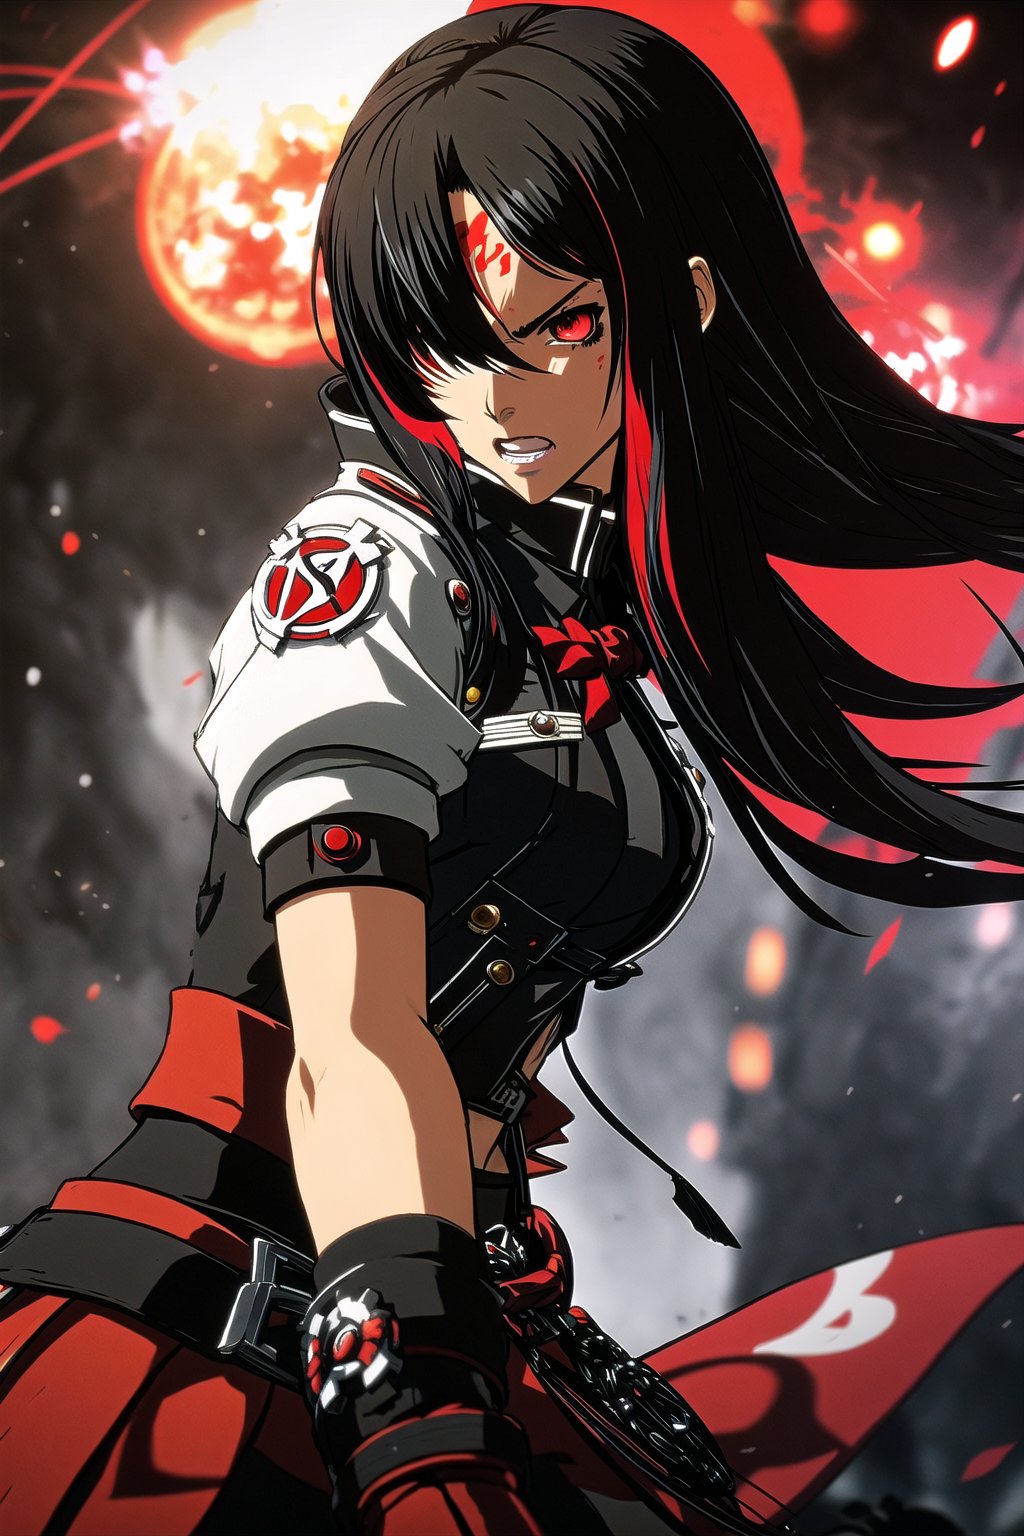 guiltys, angry, a battle girl, red eyes, black swirl hair, upper body, (bokeh:1.1), depth of field, by Akihiko Yoshida